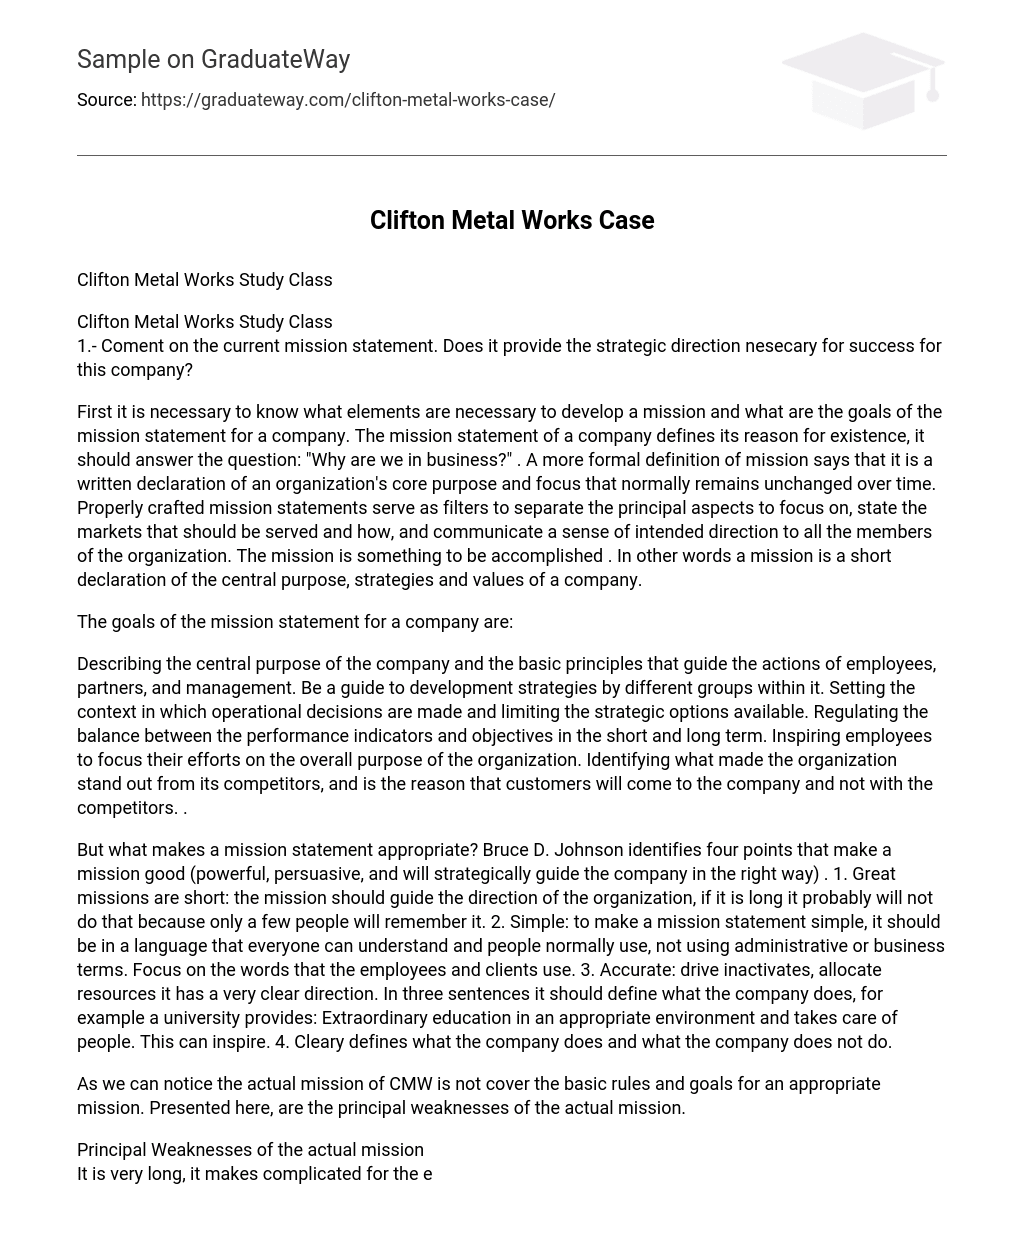 Clifton Metal Works Case